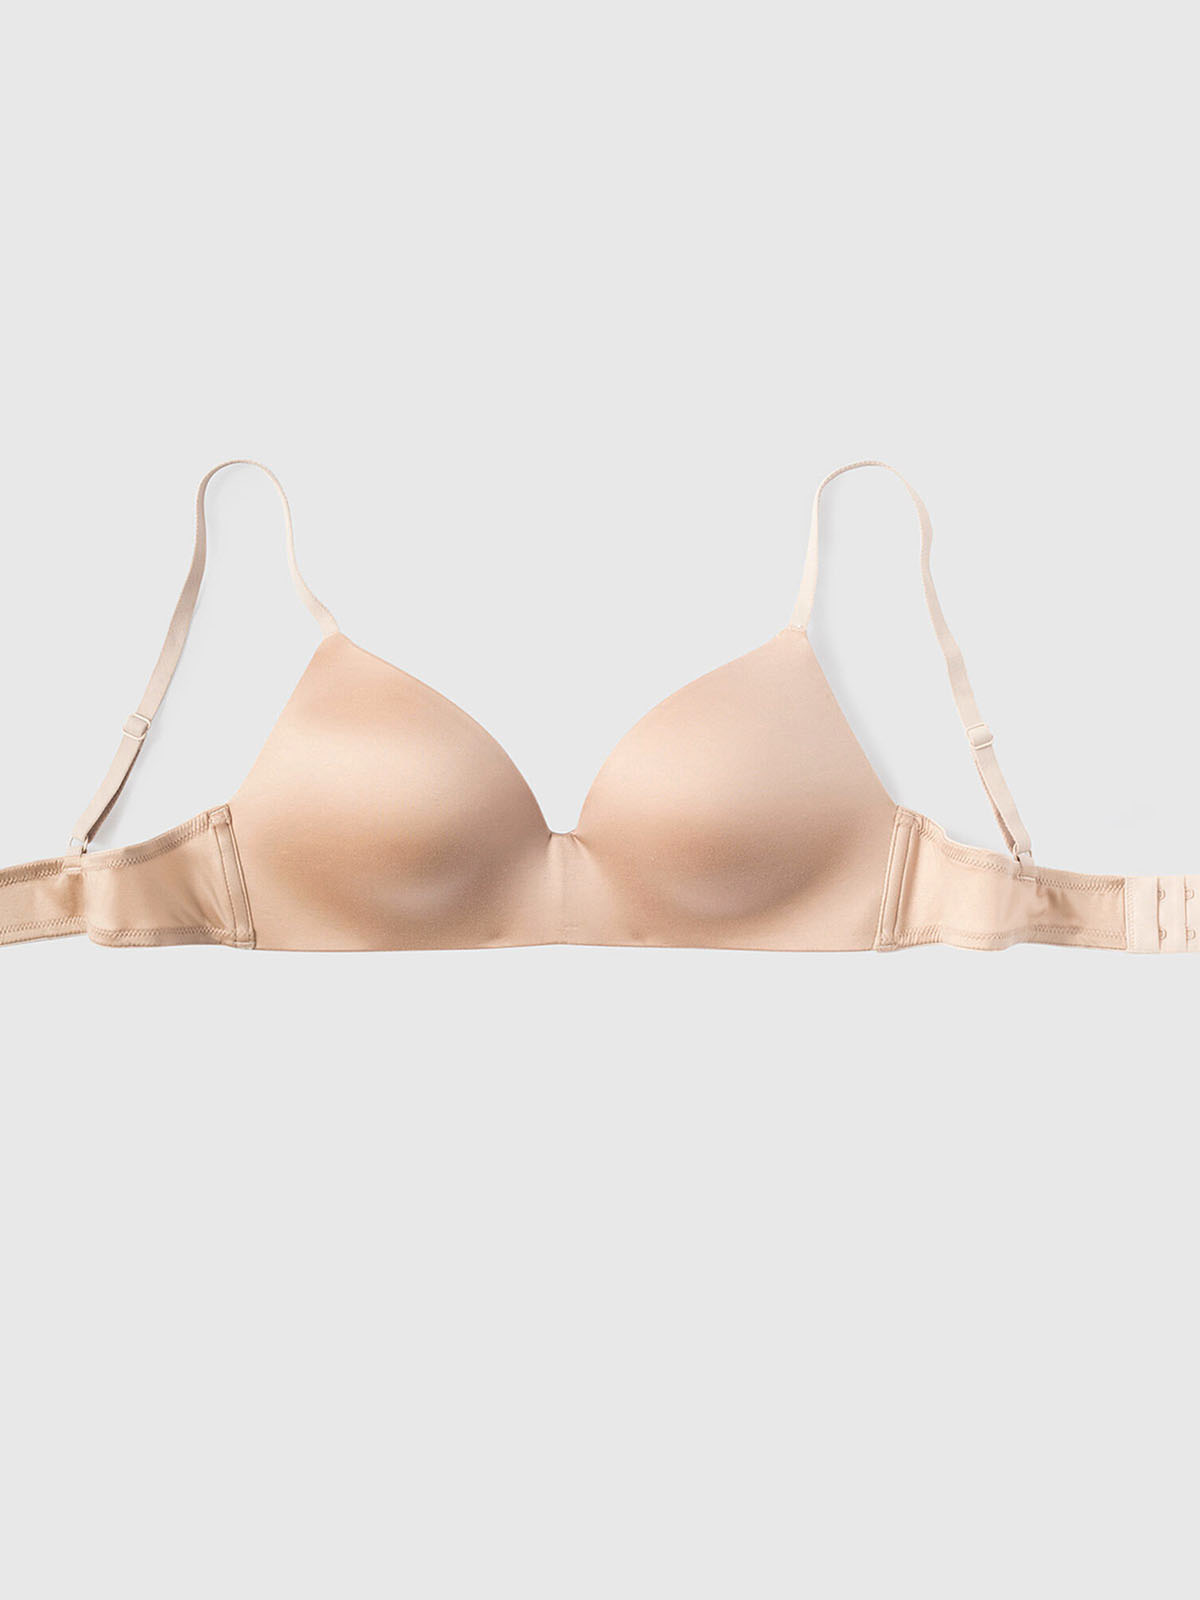 Victoria's Secret bra size 32B - $15 - From Jackie